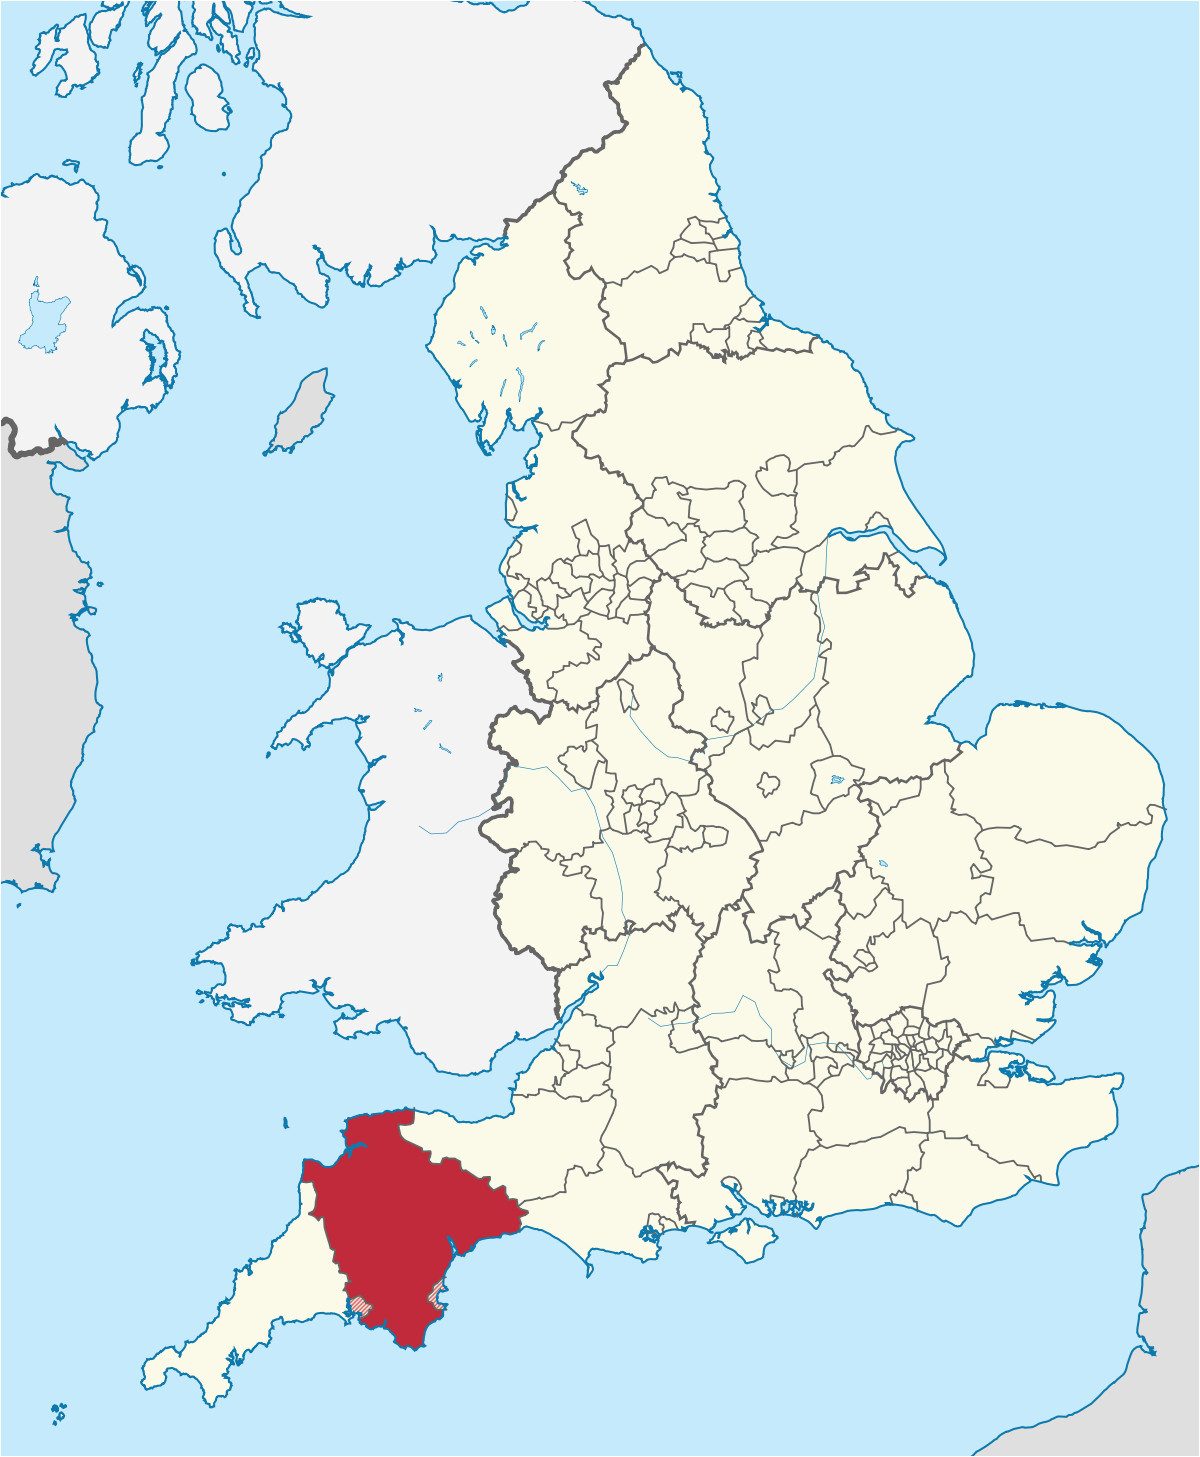 Sussex On Map Of England Devon England Wikipedia Of Sussex On Map Of England 